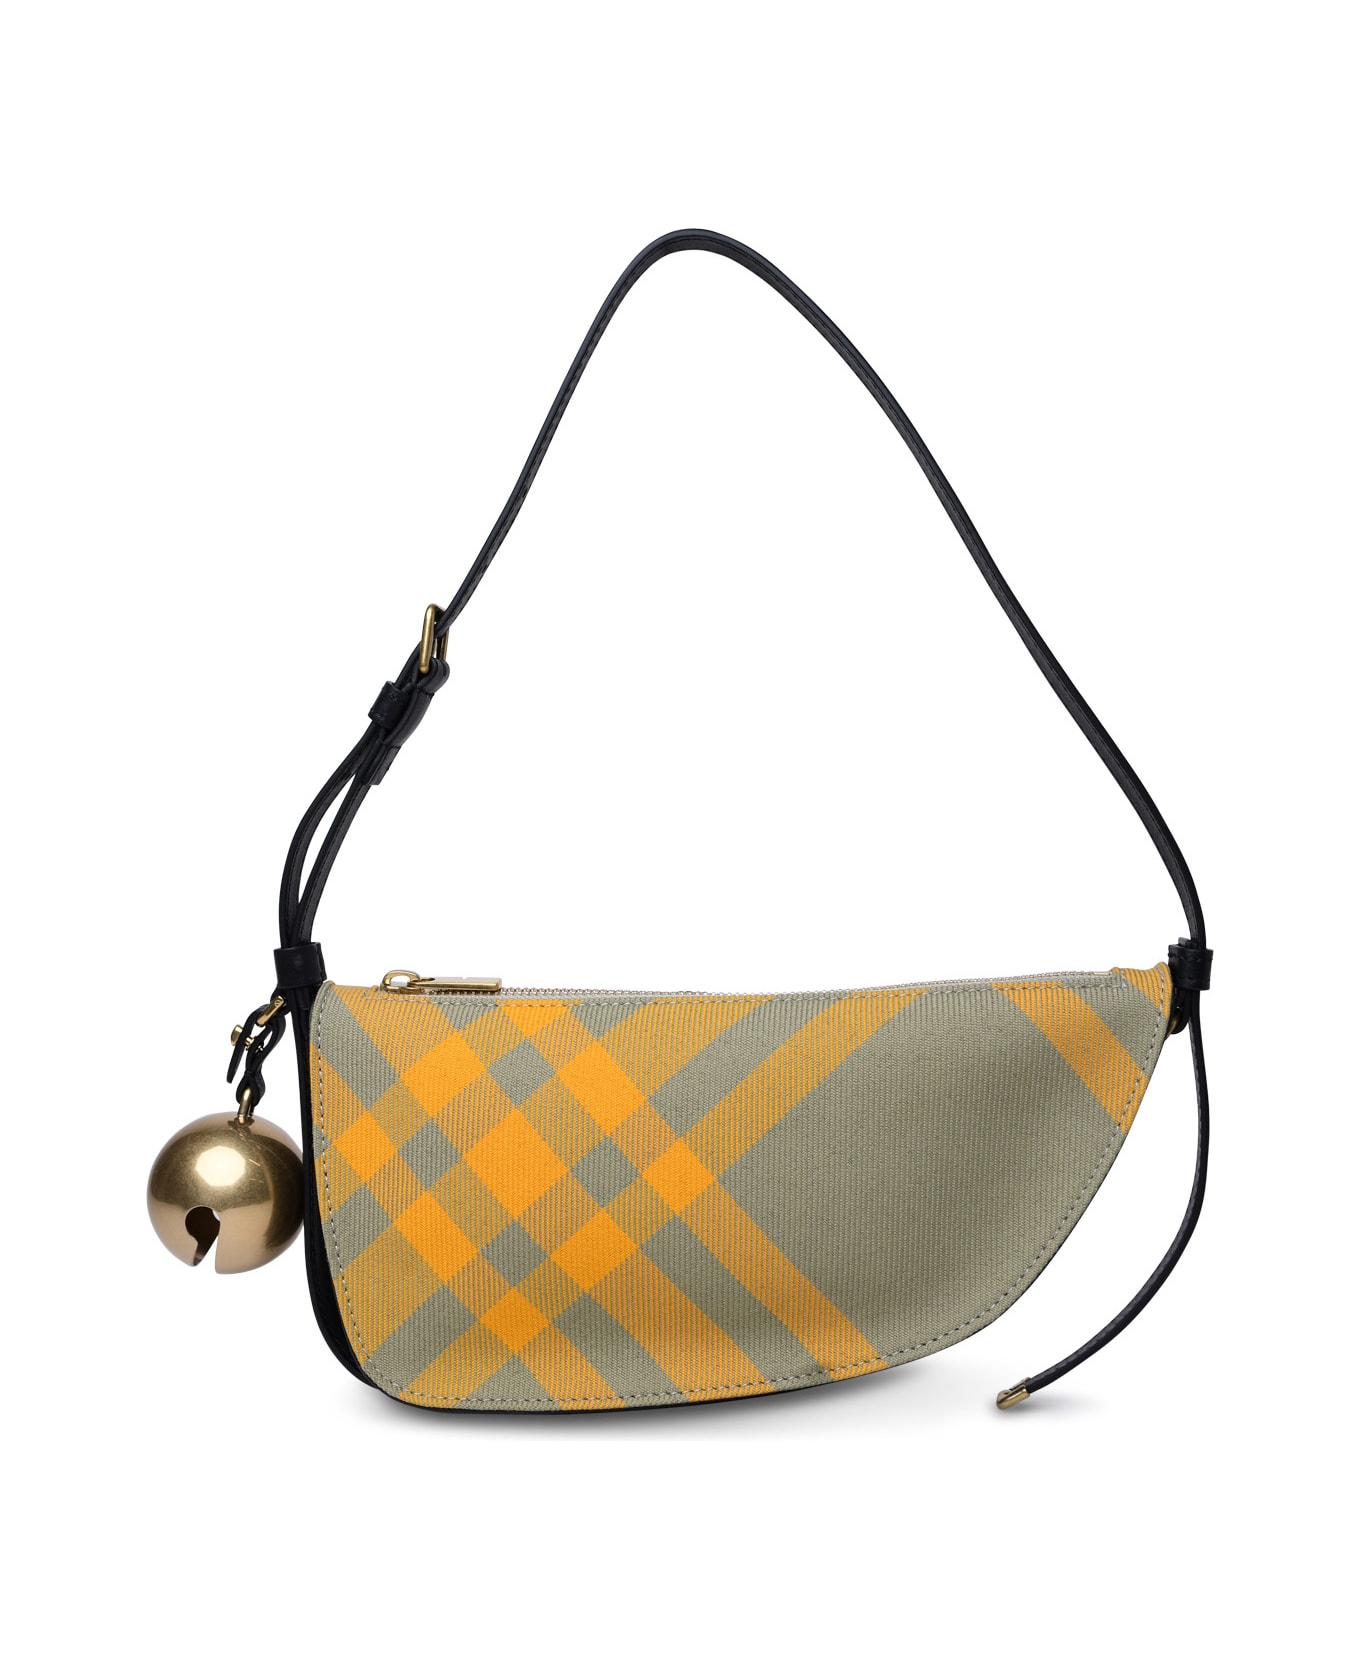 Burberry 'shield' Multicolor Wool Blend Bag - HUNTER IP CHECK